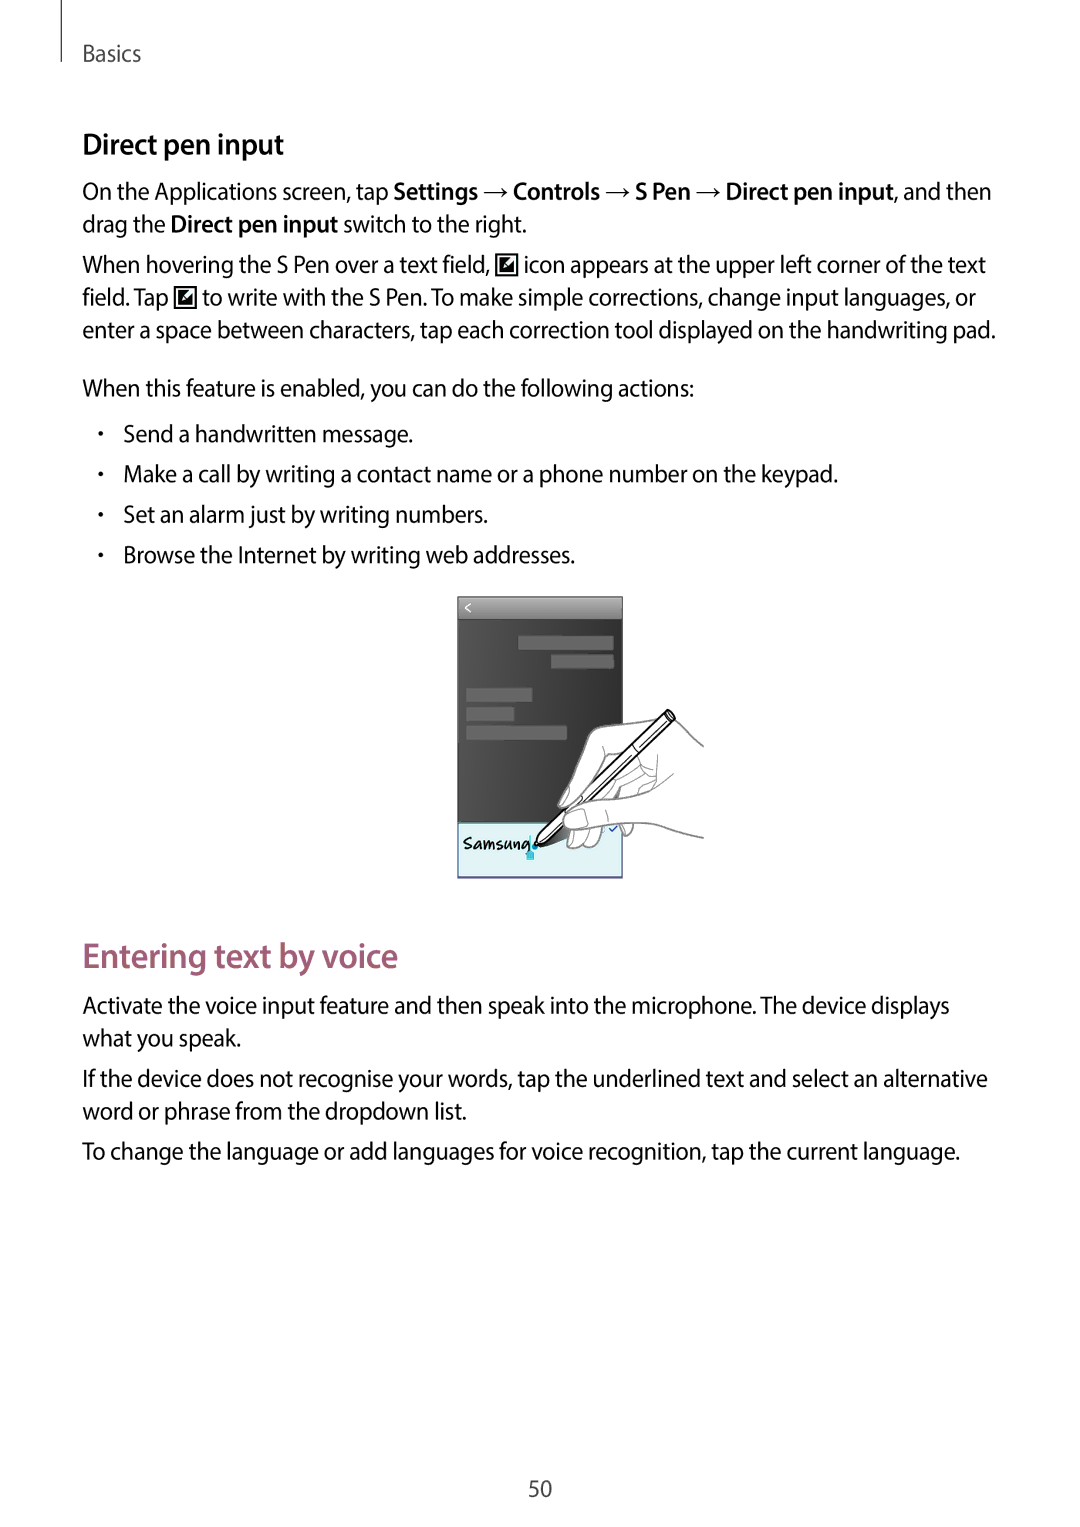 Samsung SM-N7500ZKAACR, SM-N7500ZKACAC, SM-N7500ZKAKSA, SM-N7500ZWAAFR manual Entering text by voice, Direct pen input 